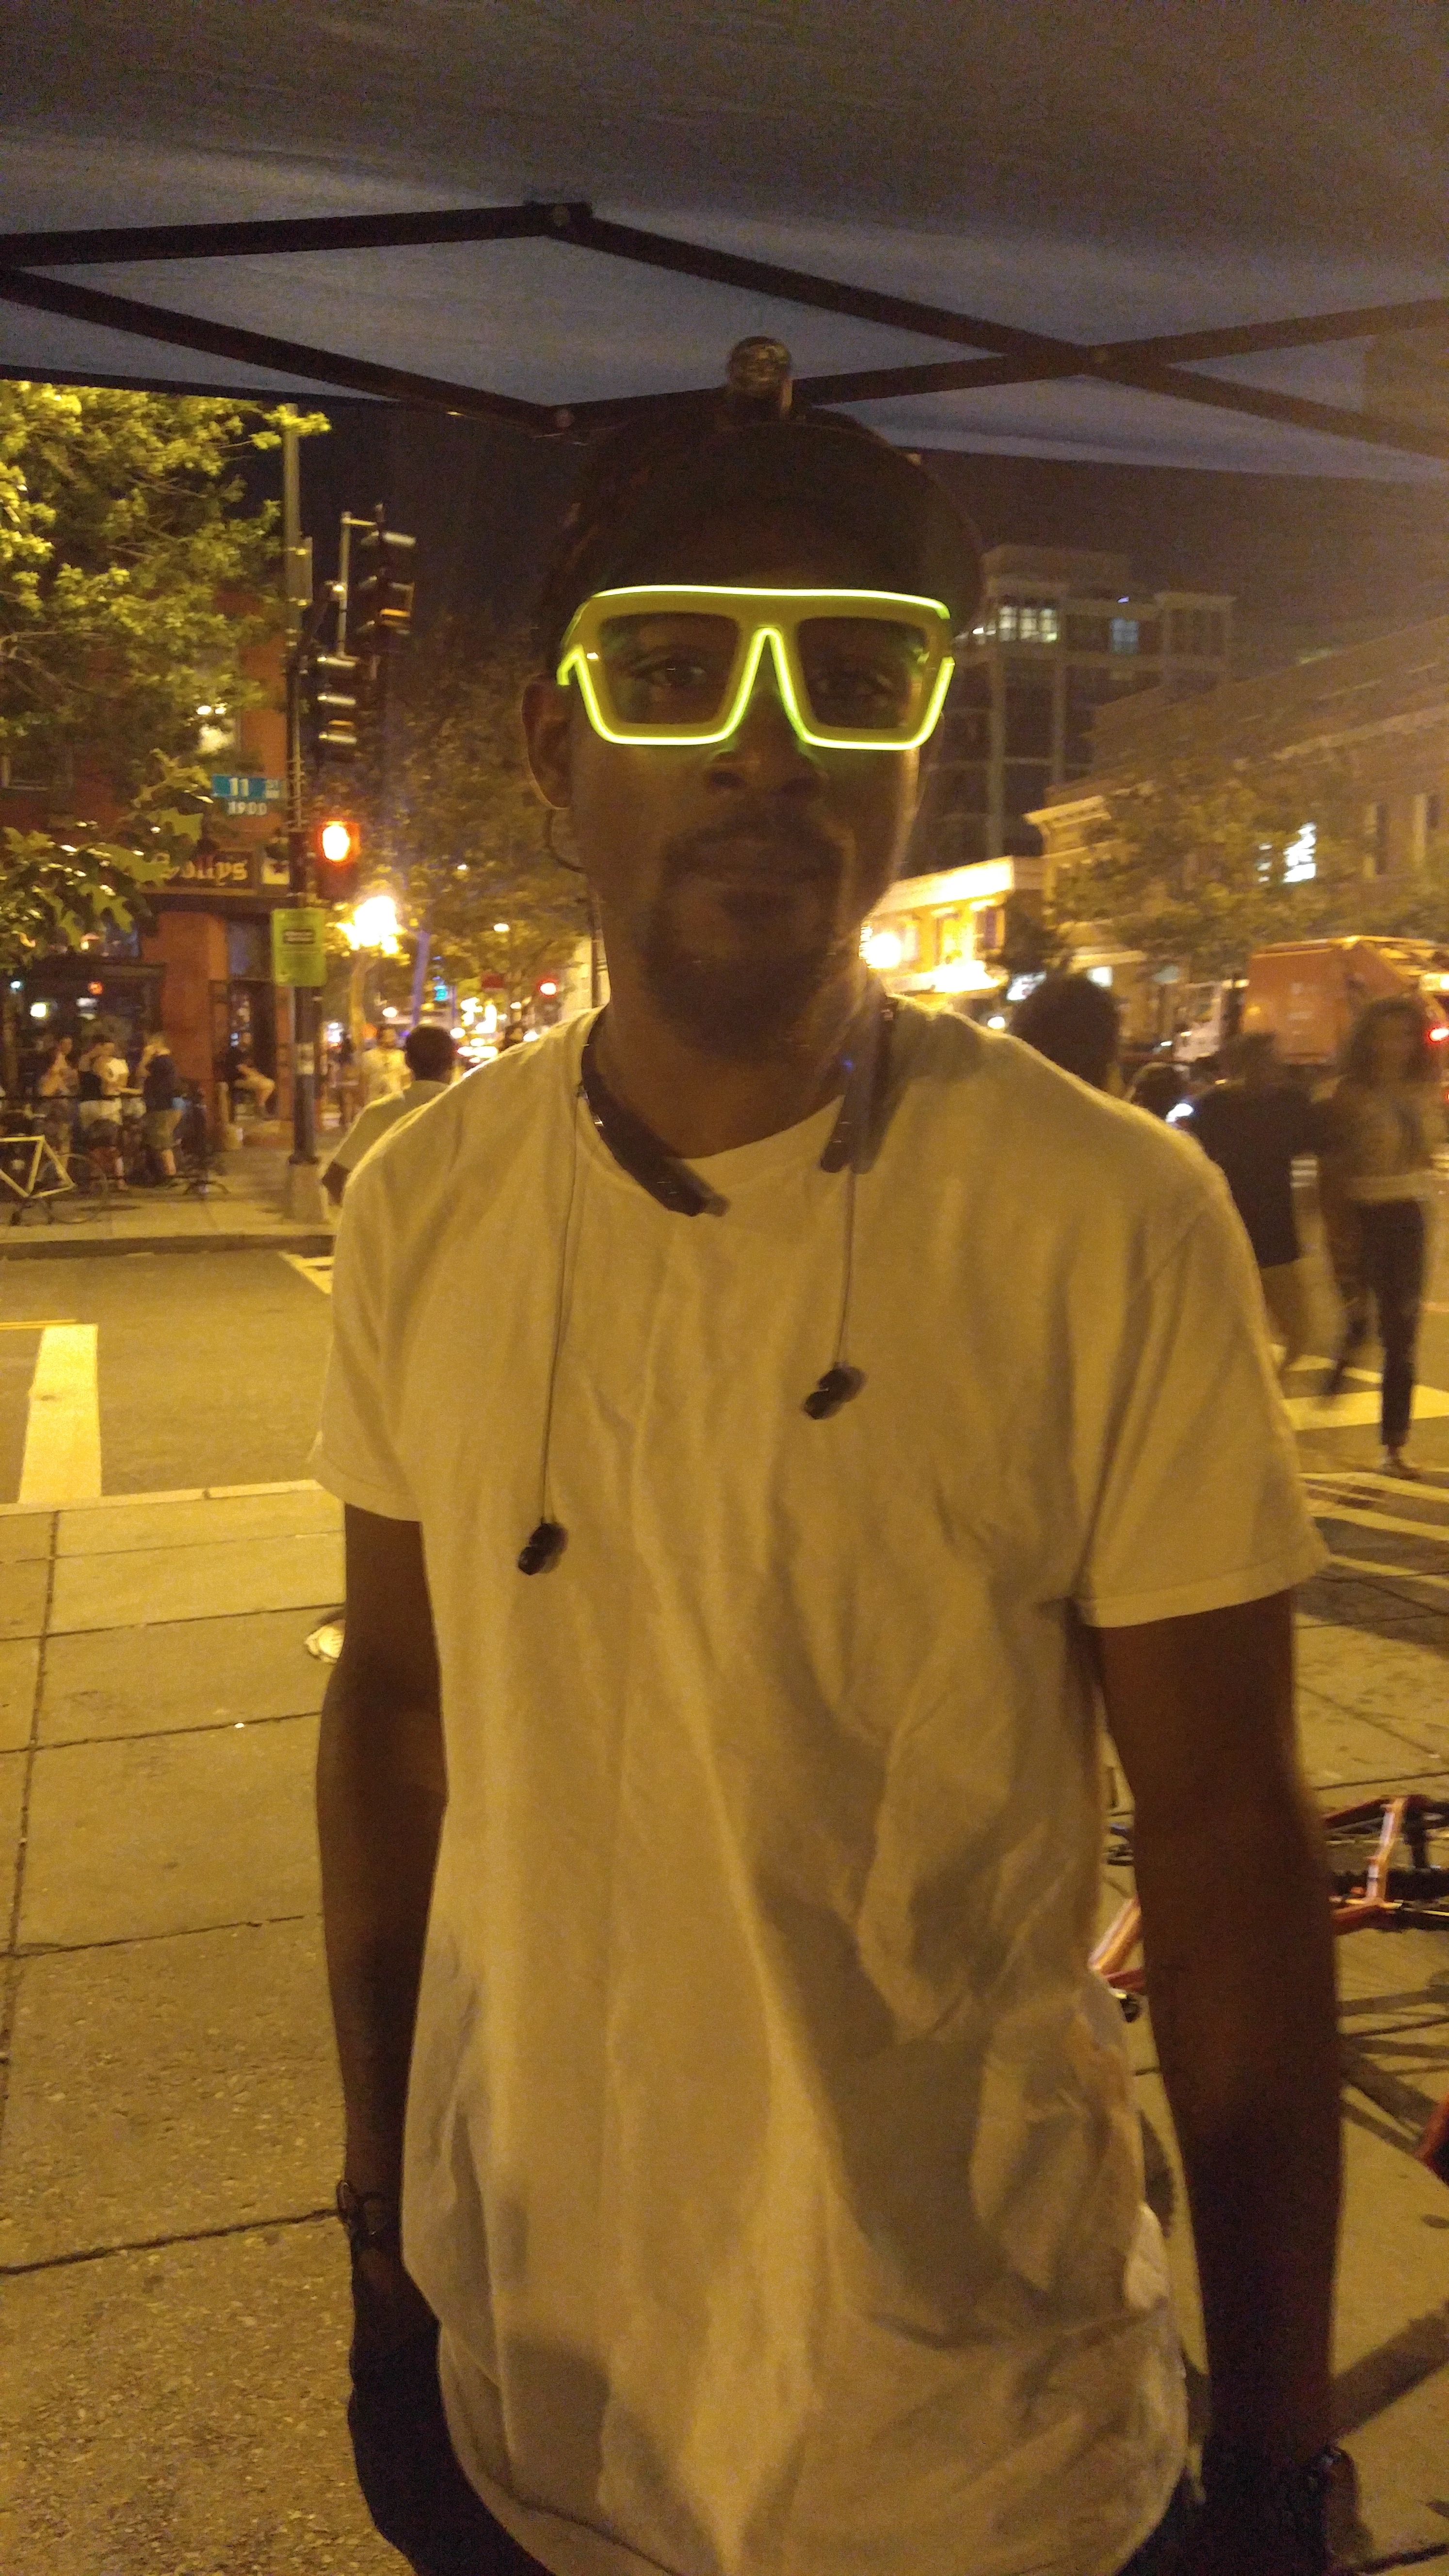 Customer wears LED glasses distributed by Nikus